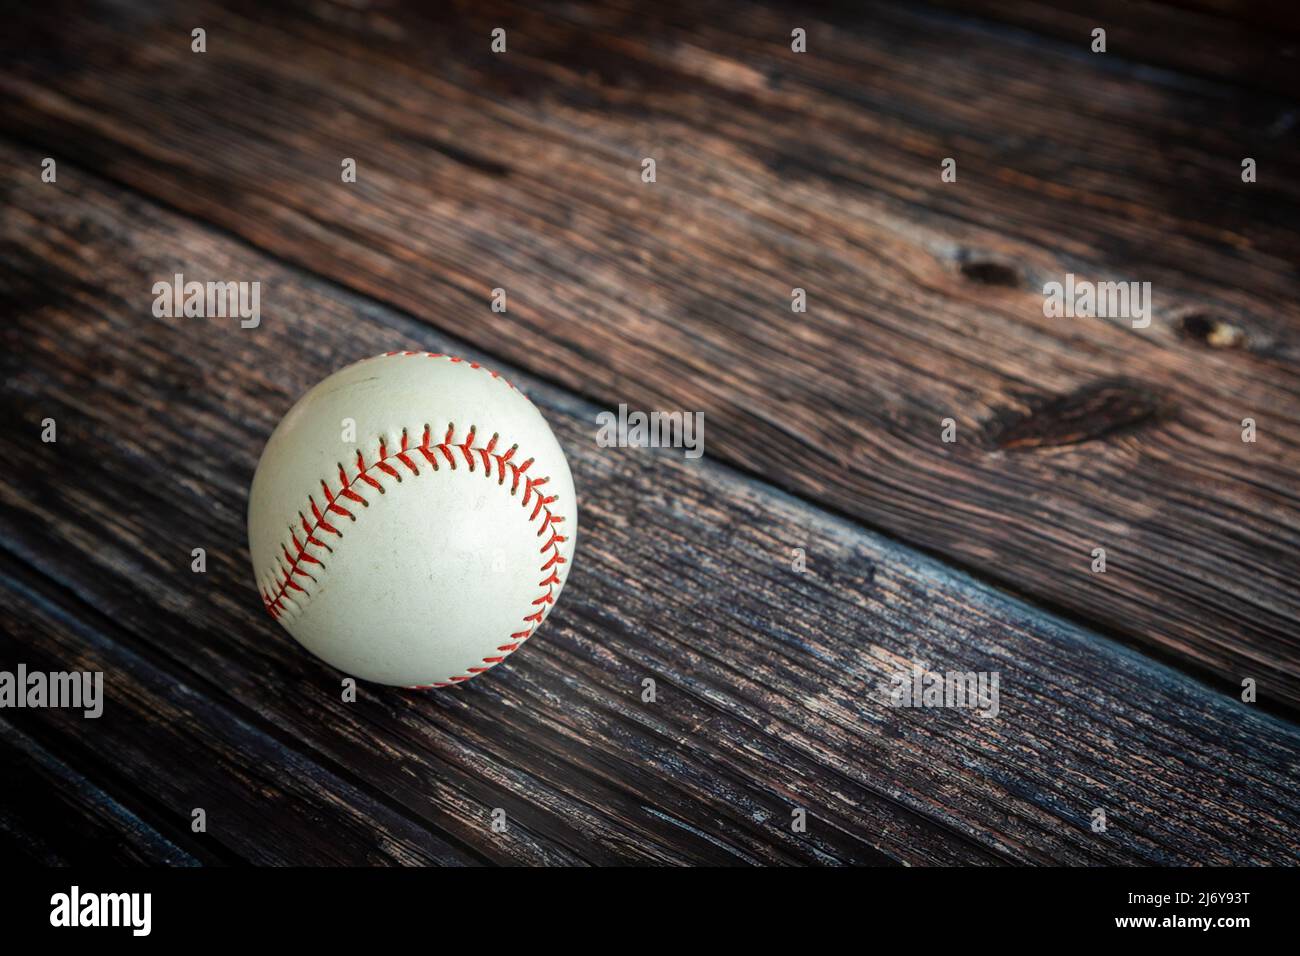 Leder-Baseballball oder Softball auf rustikalem Holzhintergrund mit Kopierfläche. Stockfoto